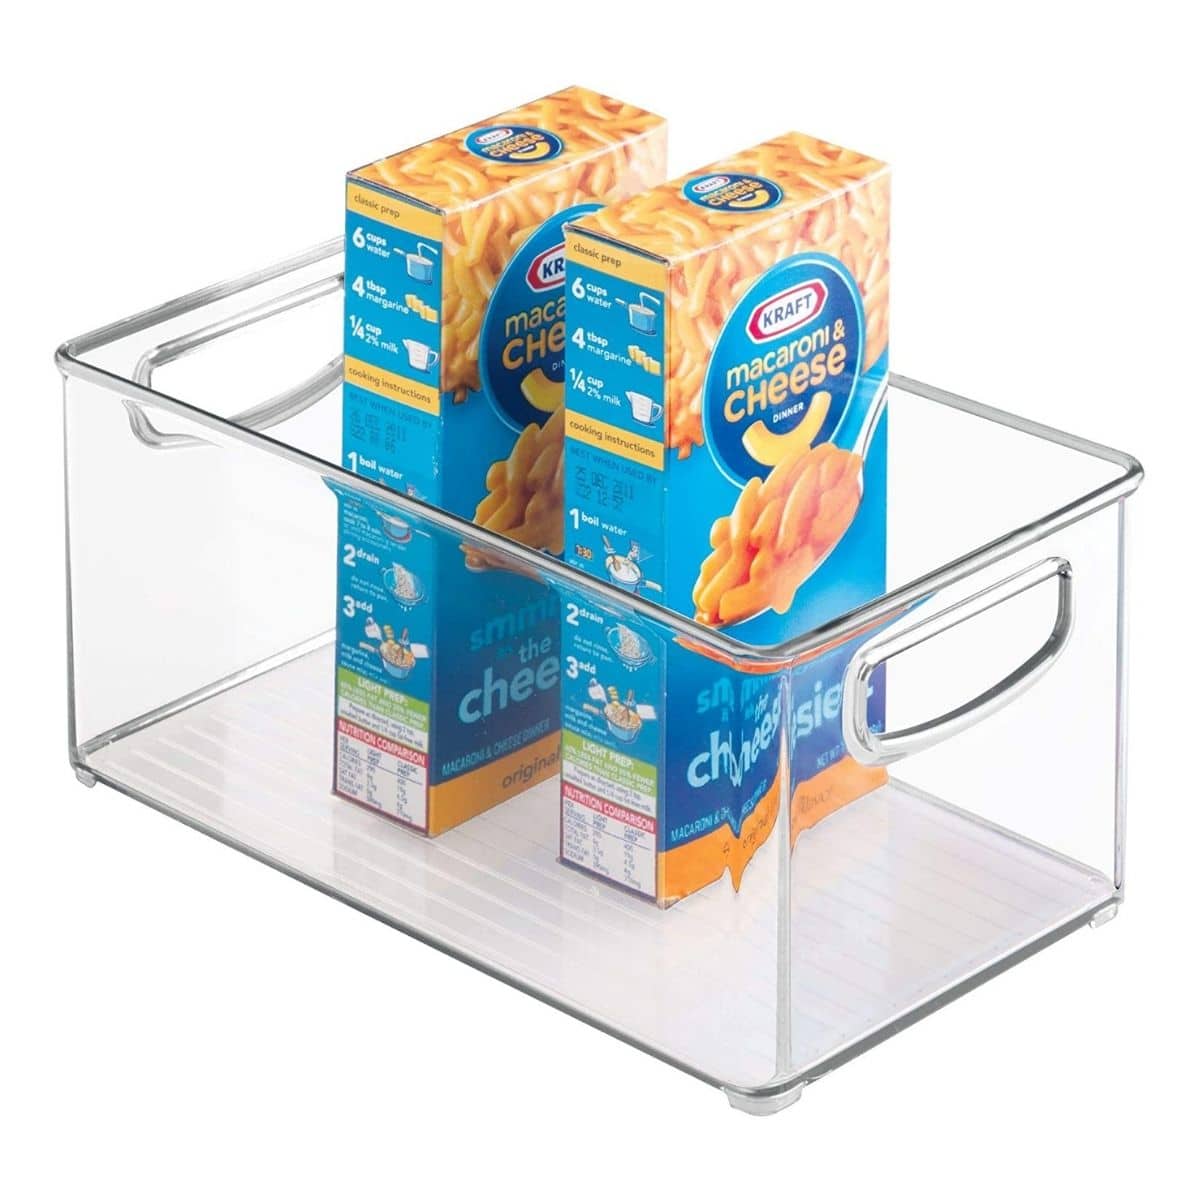 https://healthierspaces.com/wp-content/uploads/2021/09/HealthierSpace.com-iDesign-Plastic-Storage-Handles-for-Kitchen-Fridge-Freezer-Pantry-and-Cabinet-Organization-BPA-Free-Bin-Set-1.jpg